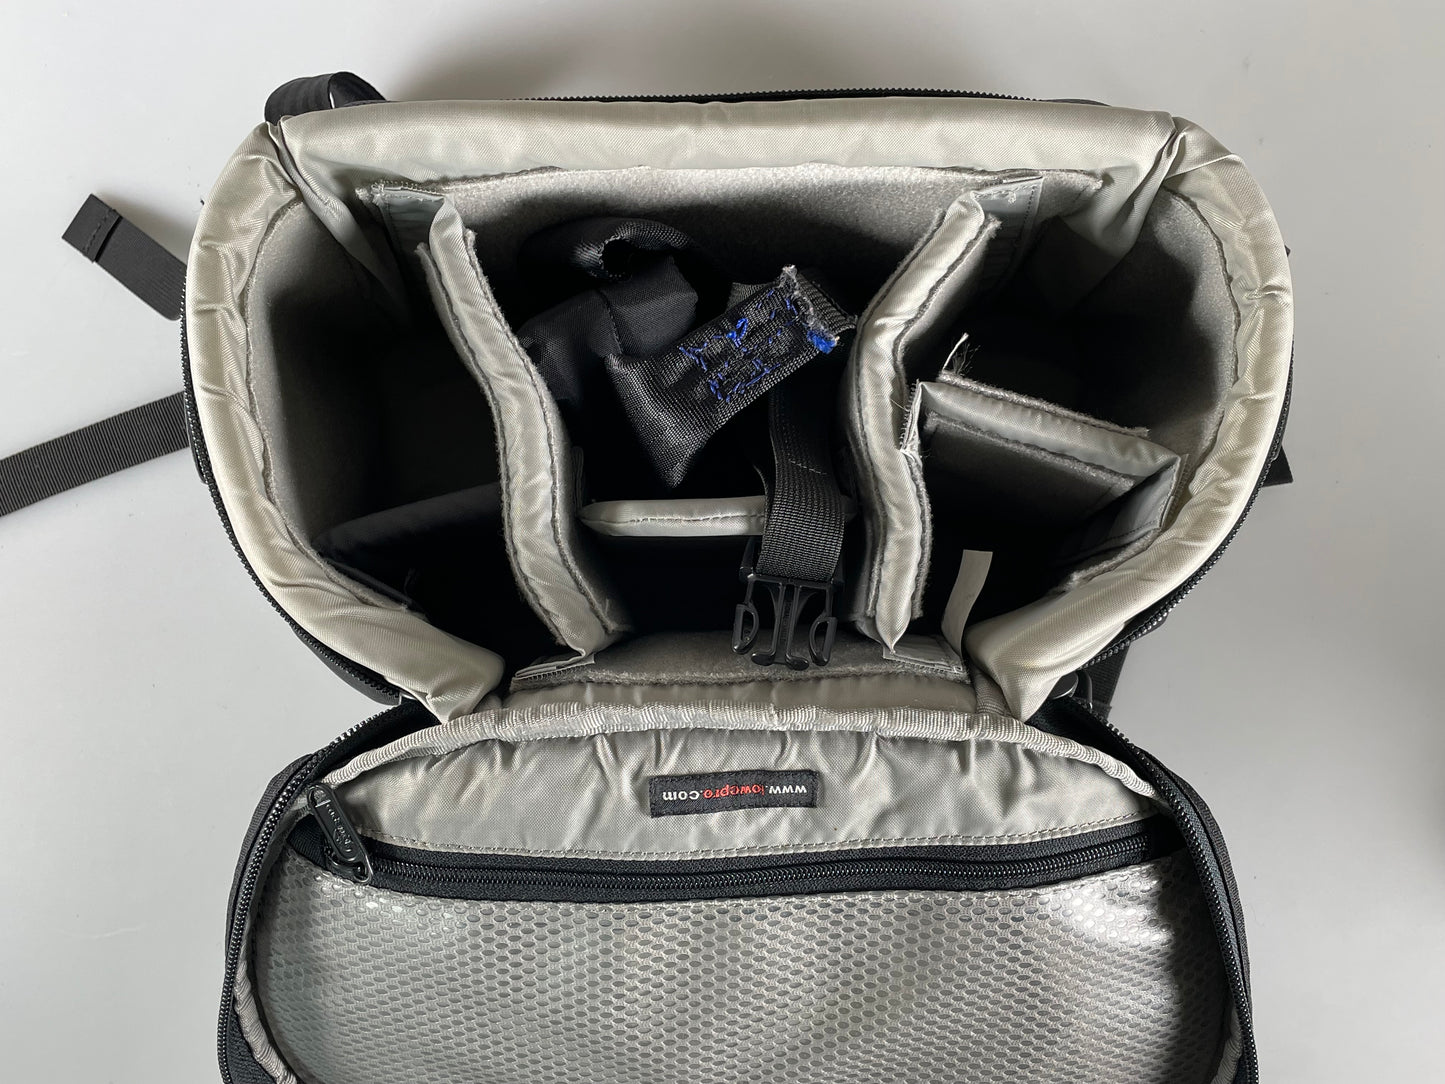 Lowepro Black canvas Camera Bag case